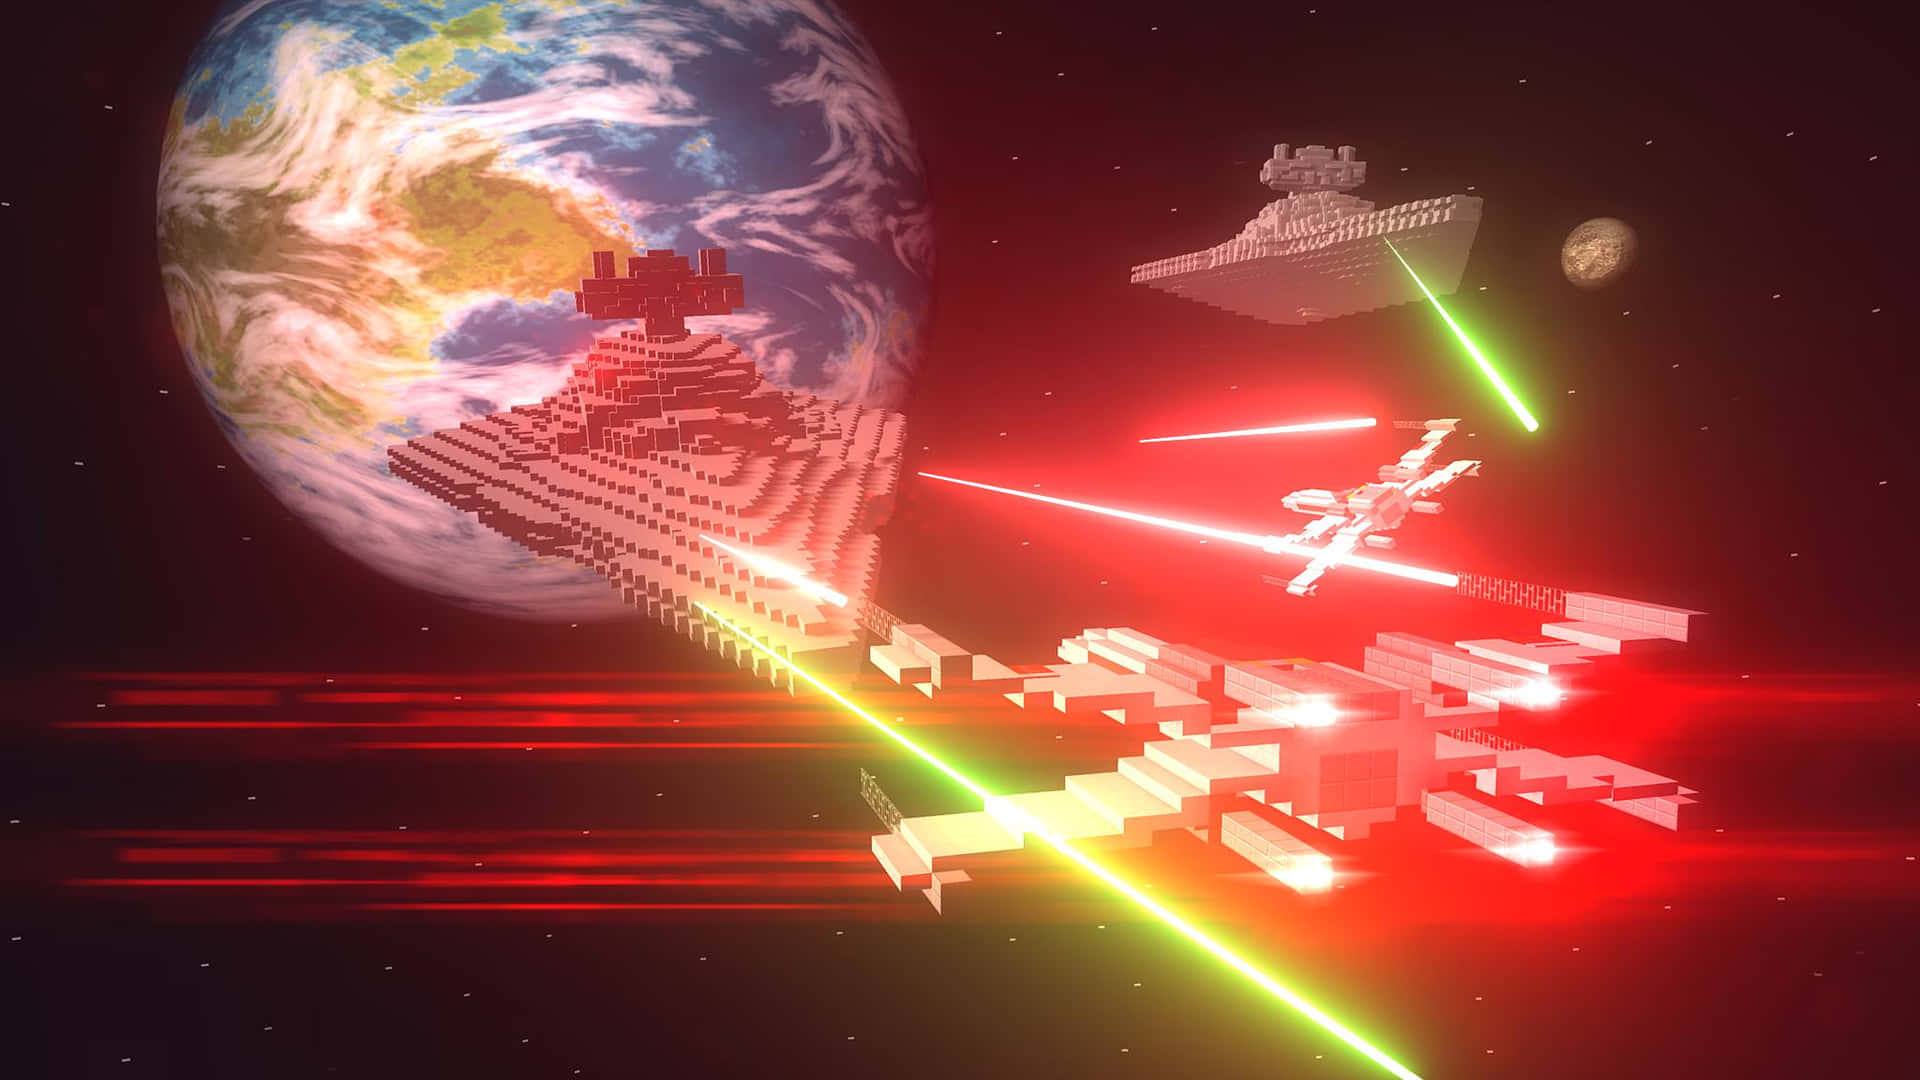 Epic Space Battle Star Wars Style Wallpaper